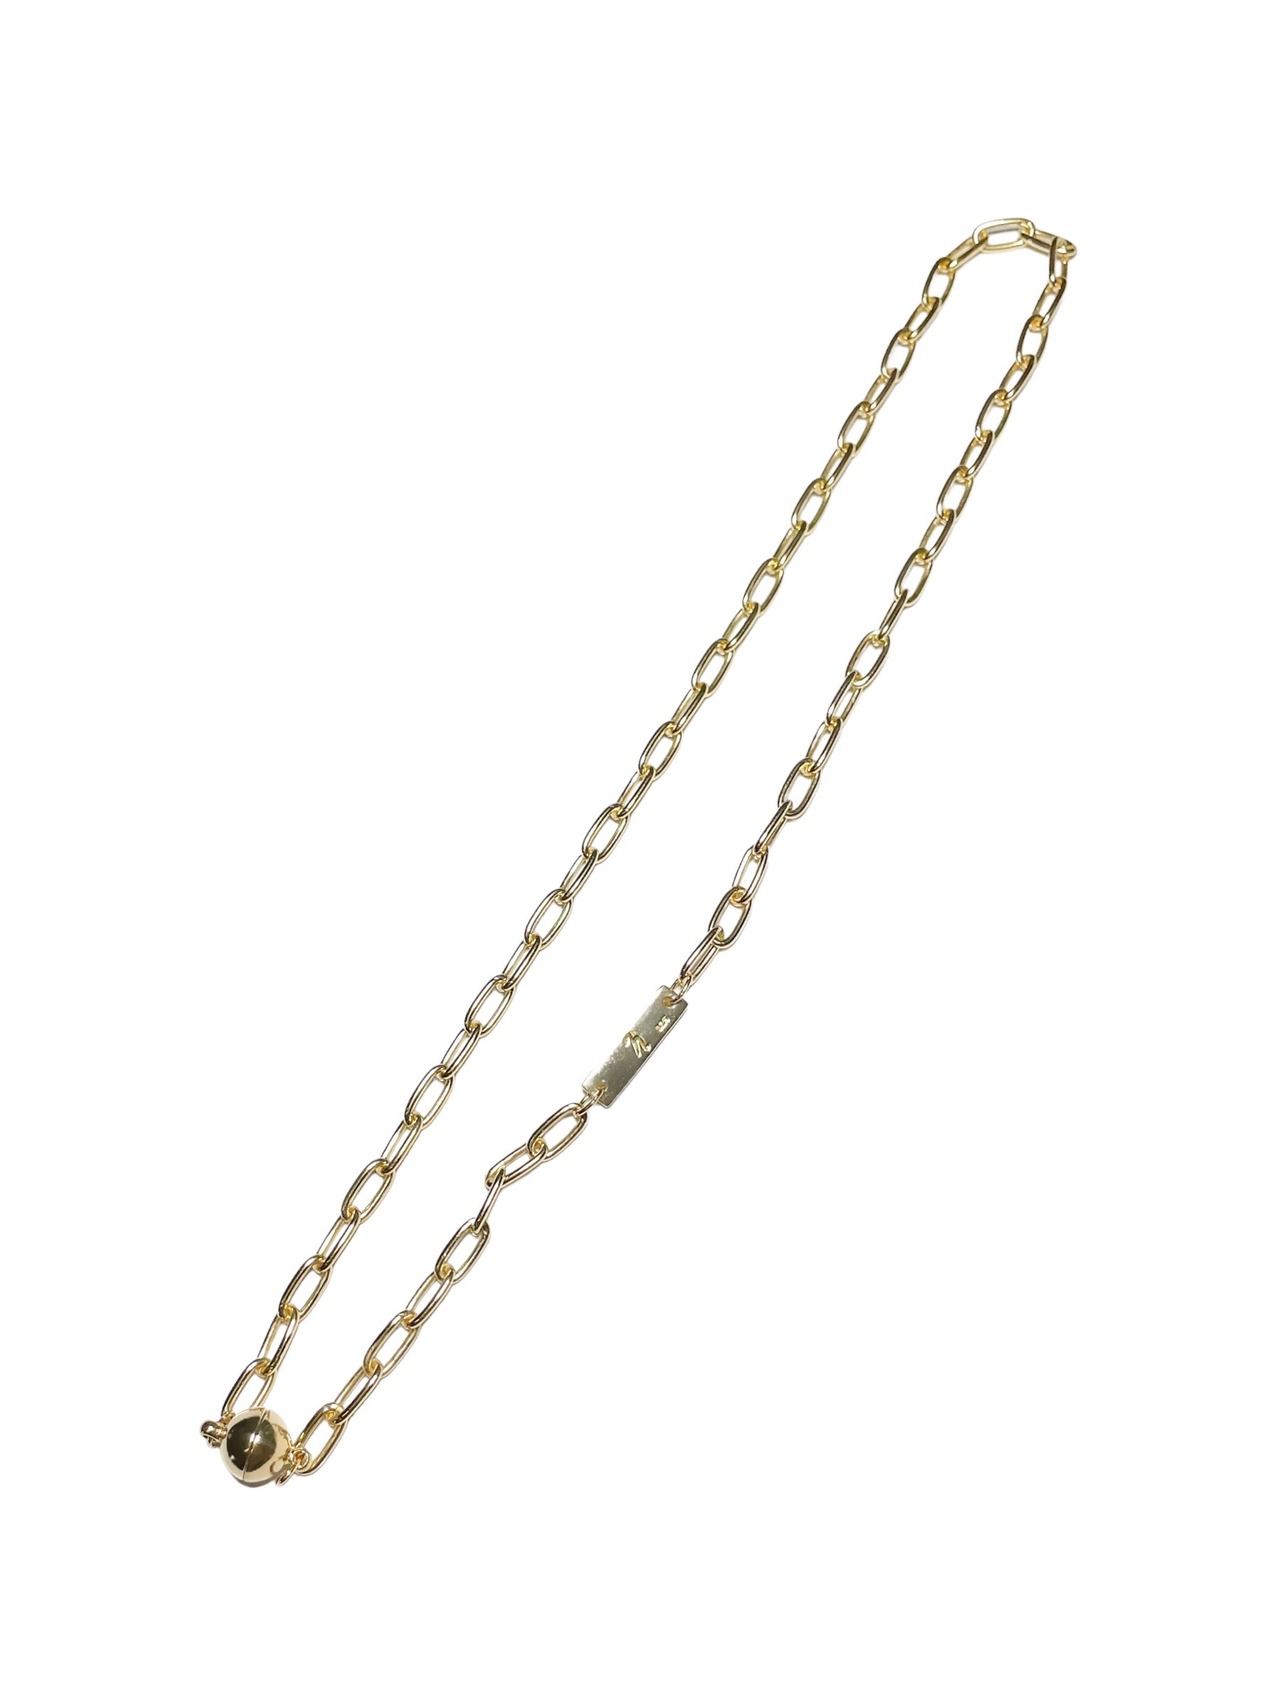 #001 (nolüd magnet chain necklace/choker) silver925 necklace